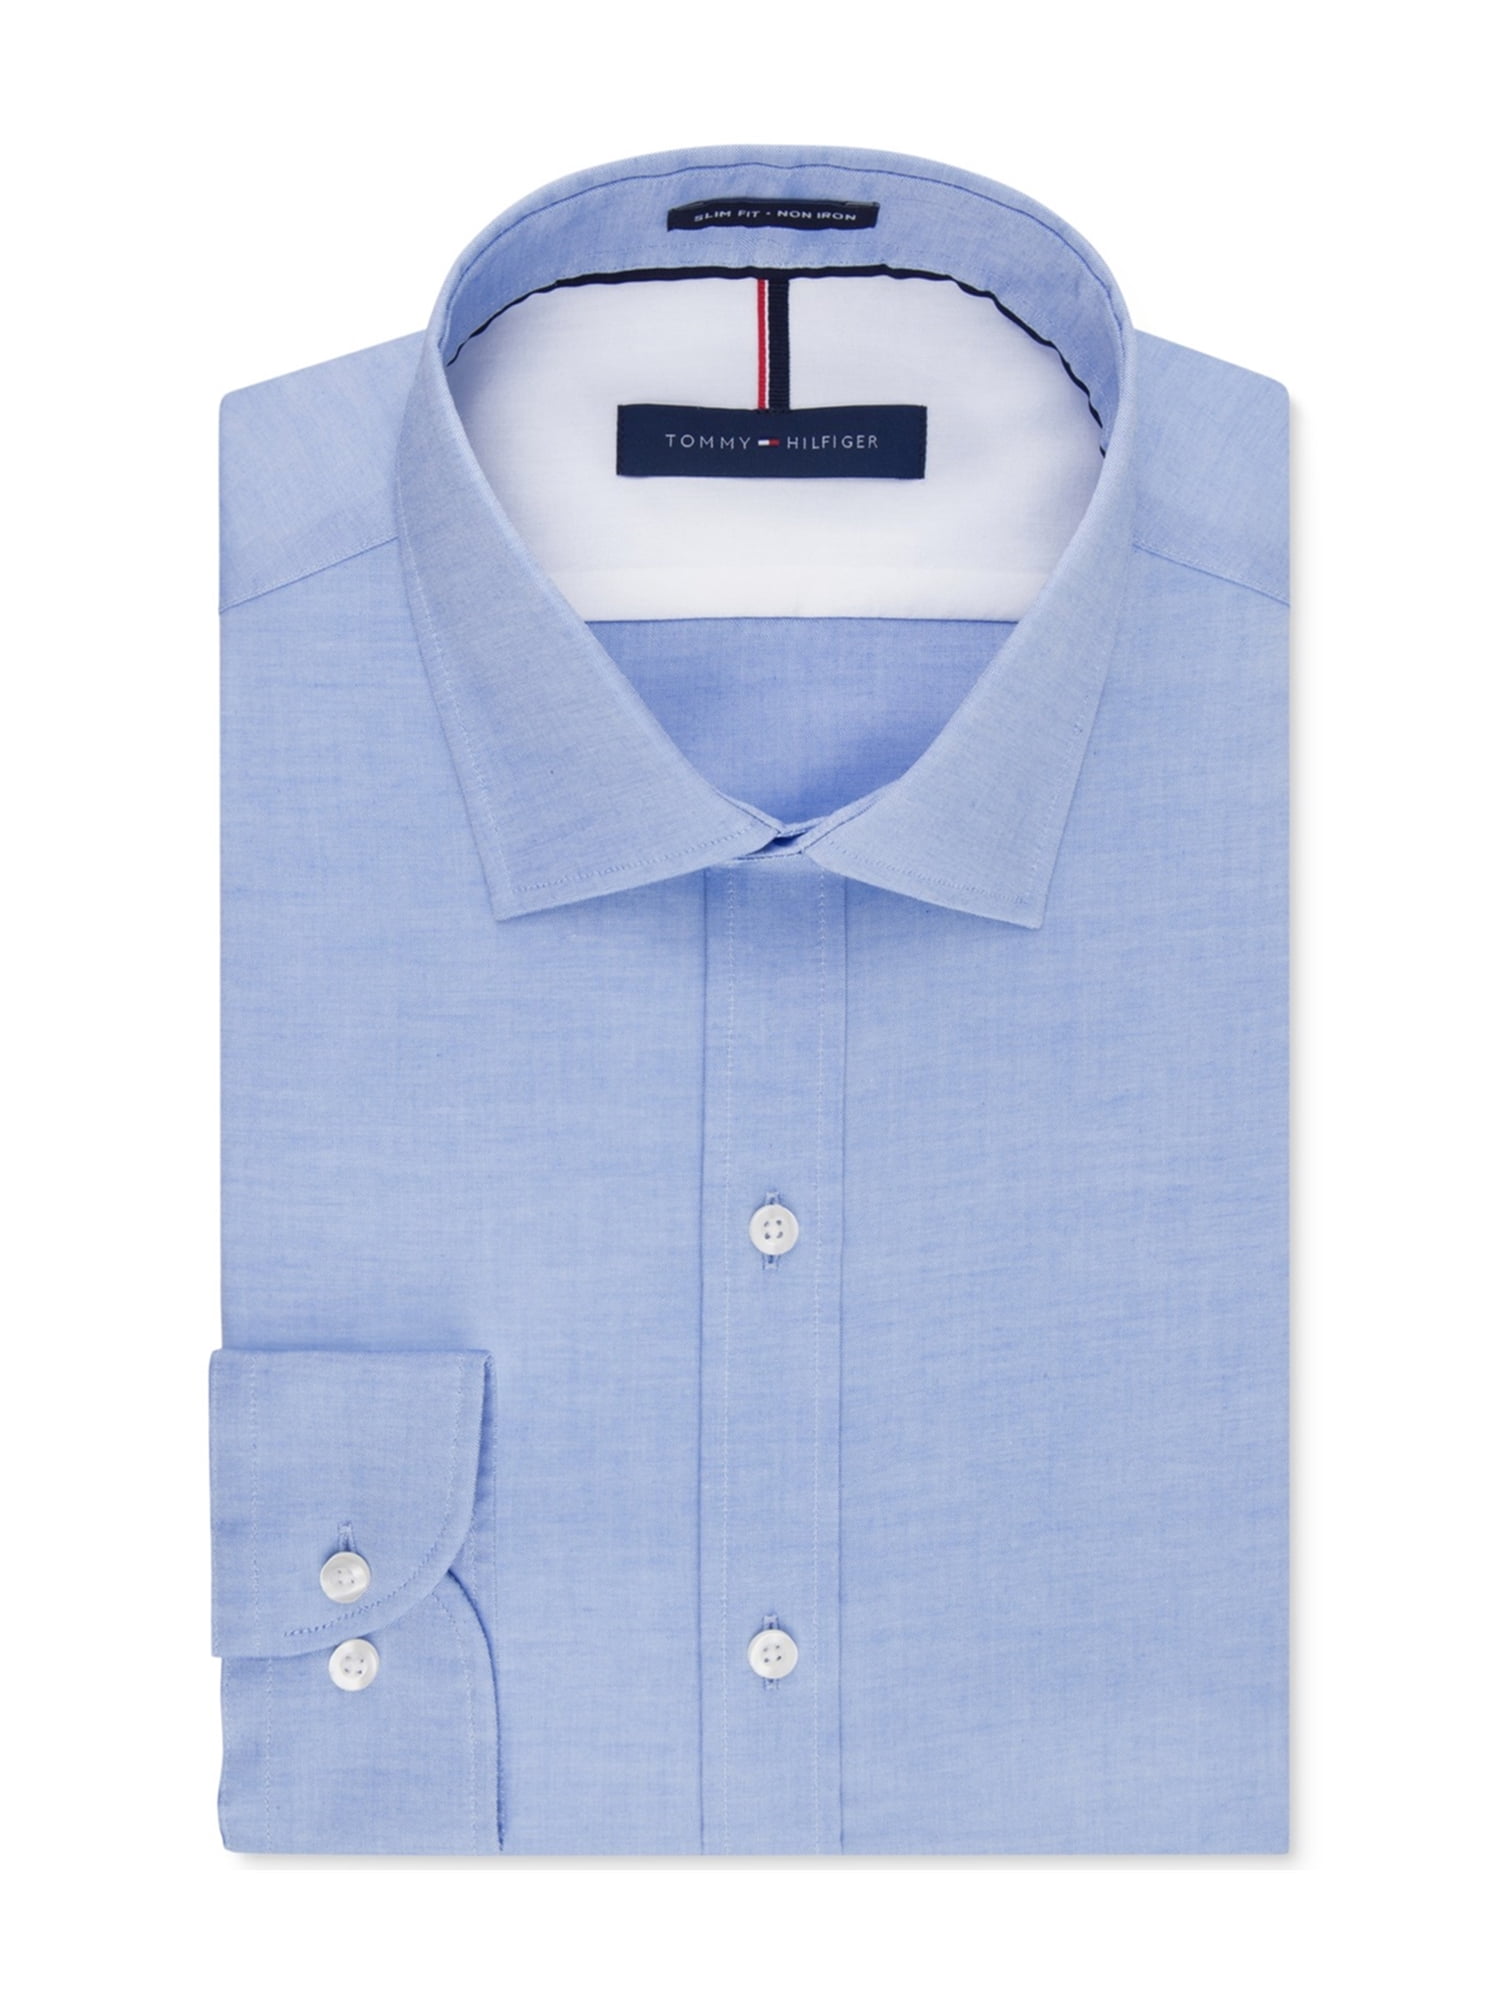 Tommy Hilfiger Mens Slim-Fit Non-Iron Button Up Dress Shirt blue 15.5 